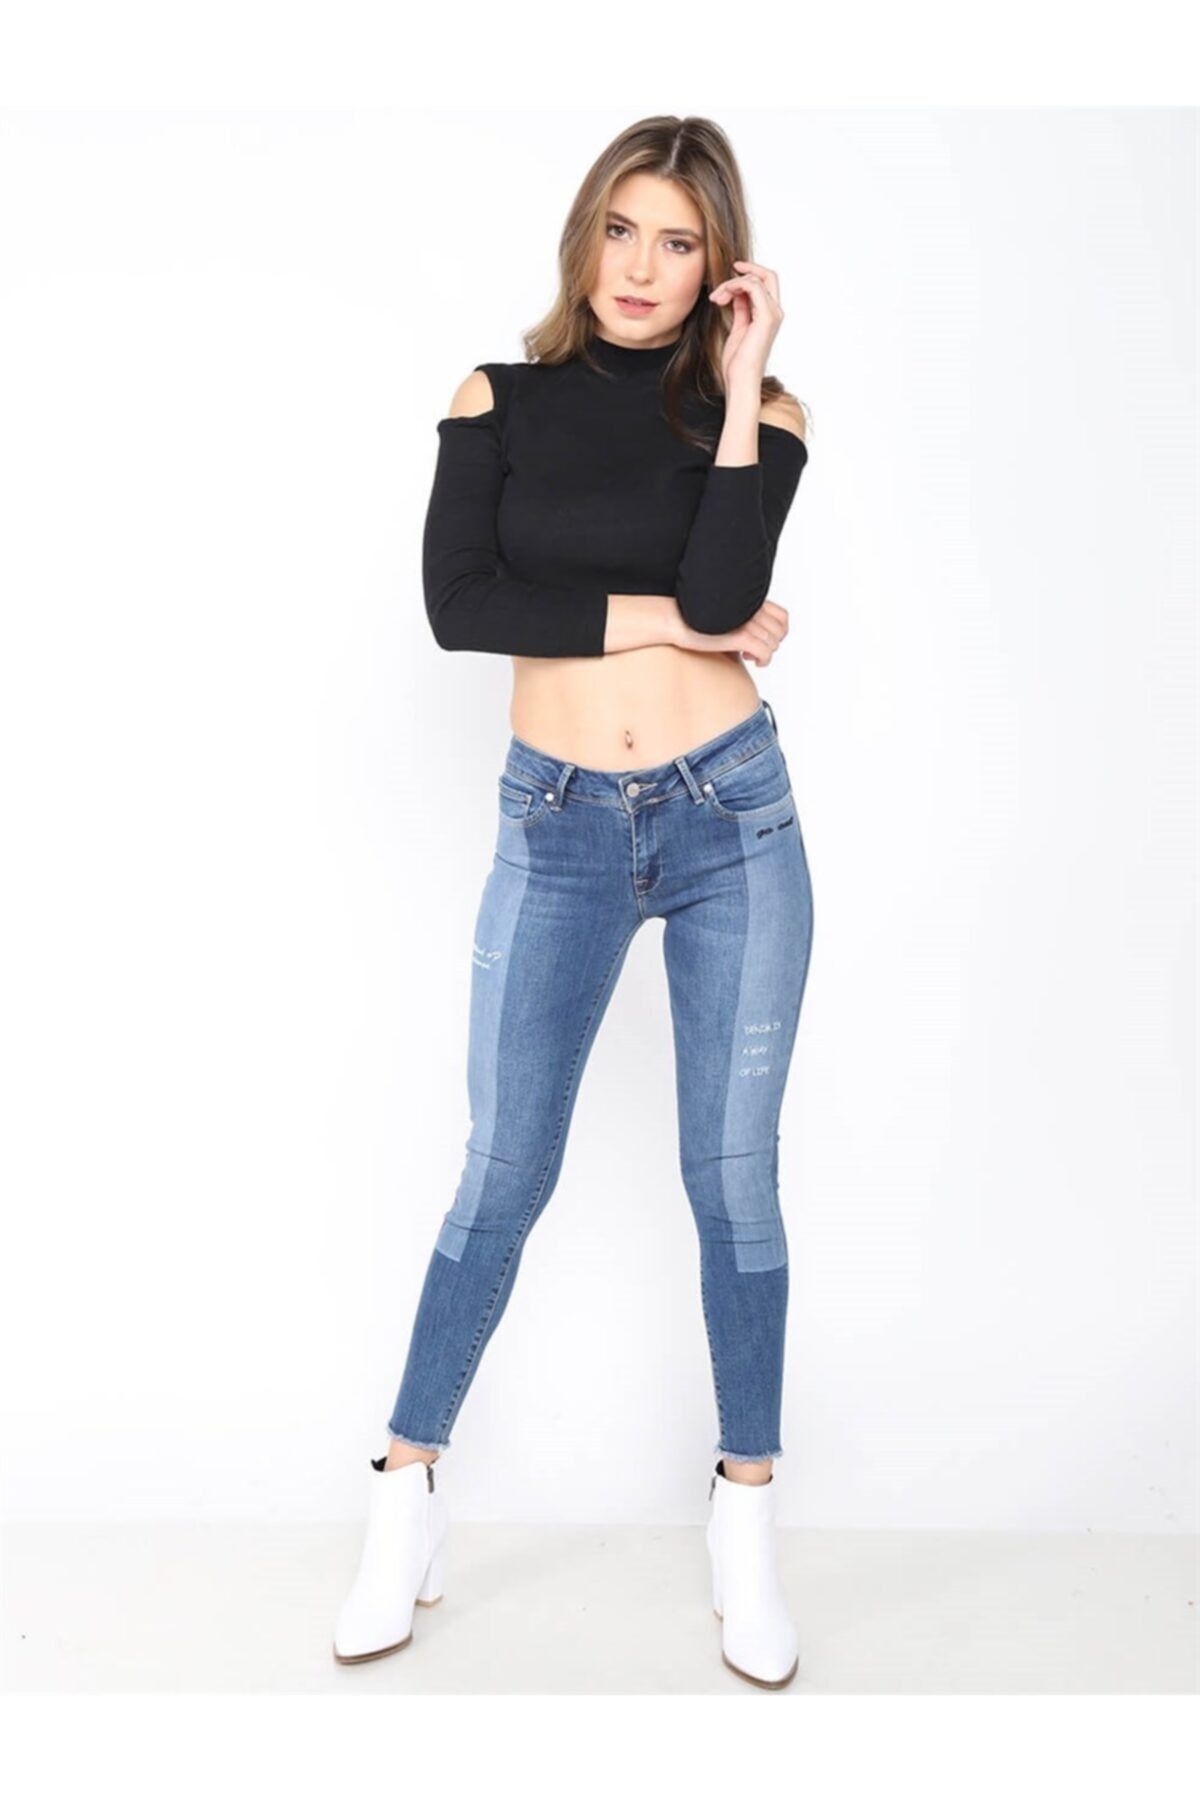 Twister Jeans Kadın Slim Fit Orta Bel Pantolon Lima 9134-01 C 01